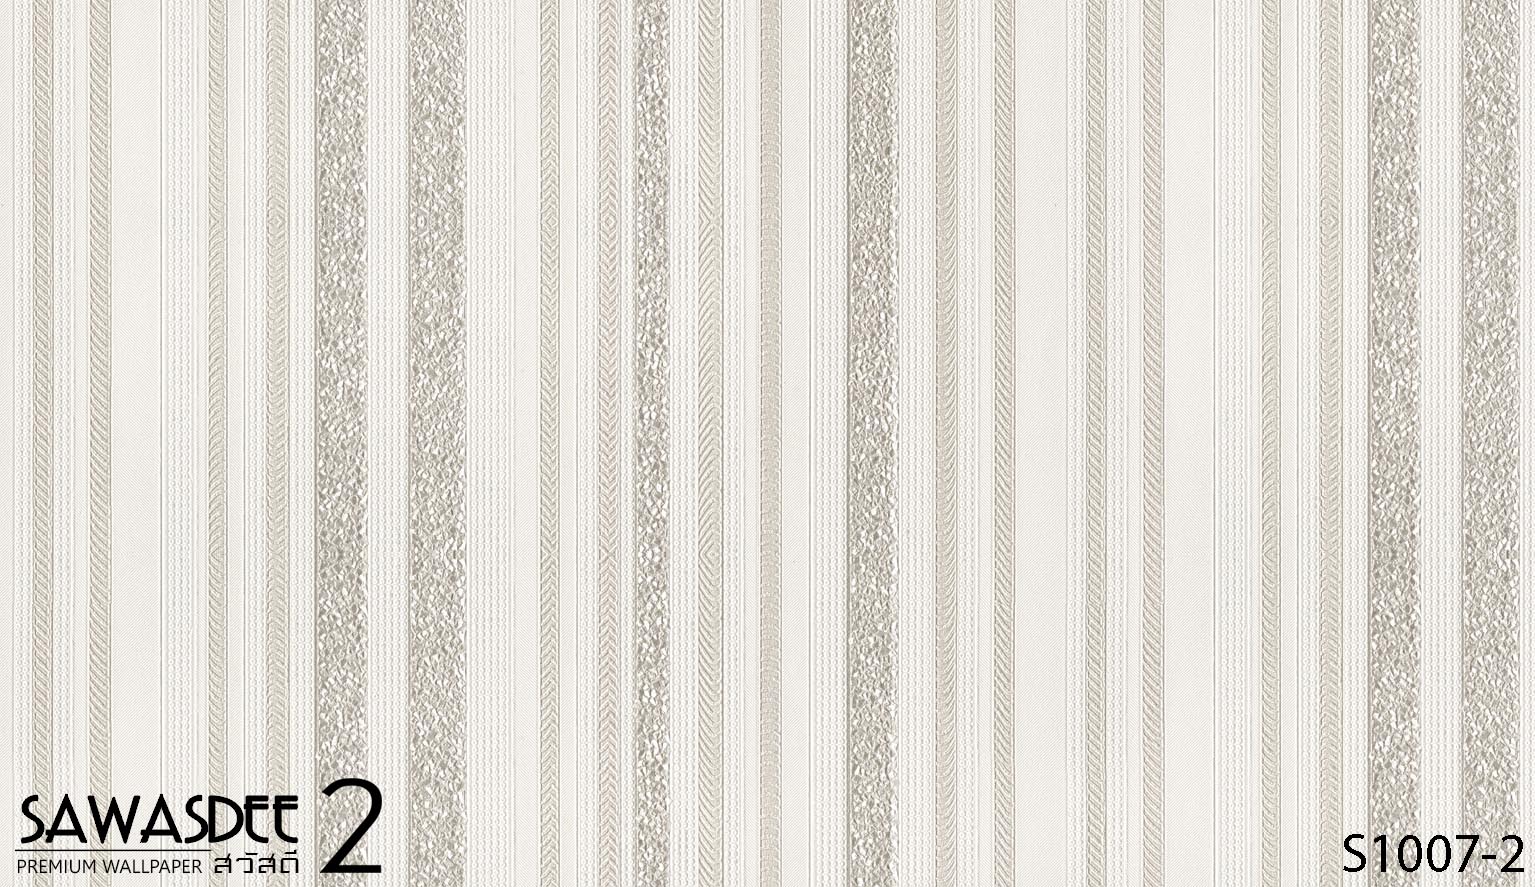 Wallpaper (SAWASDEE 2) S1007-2